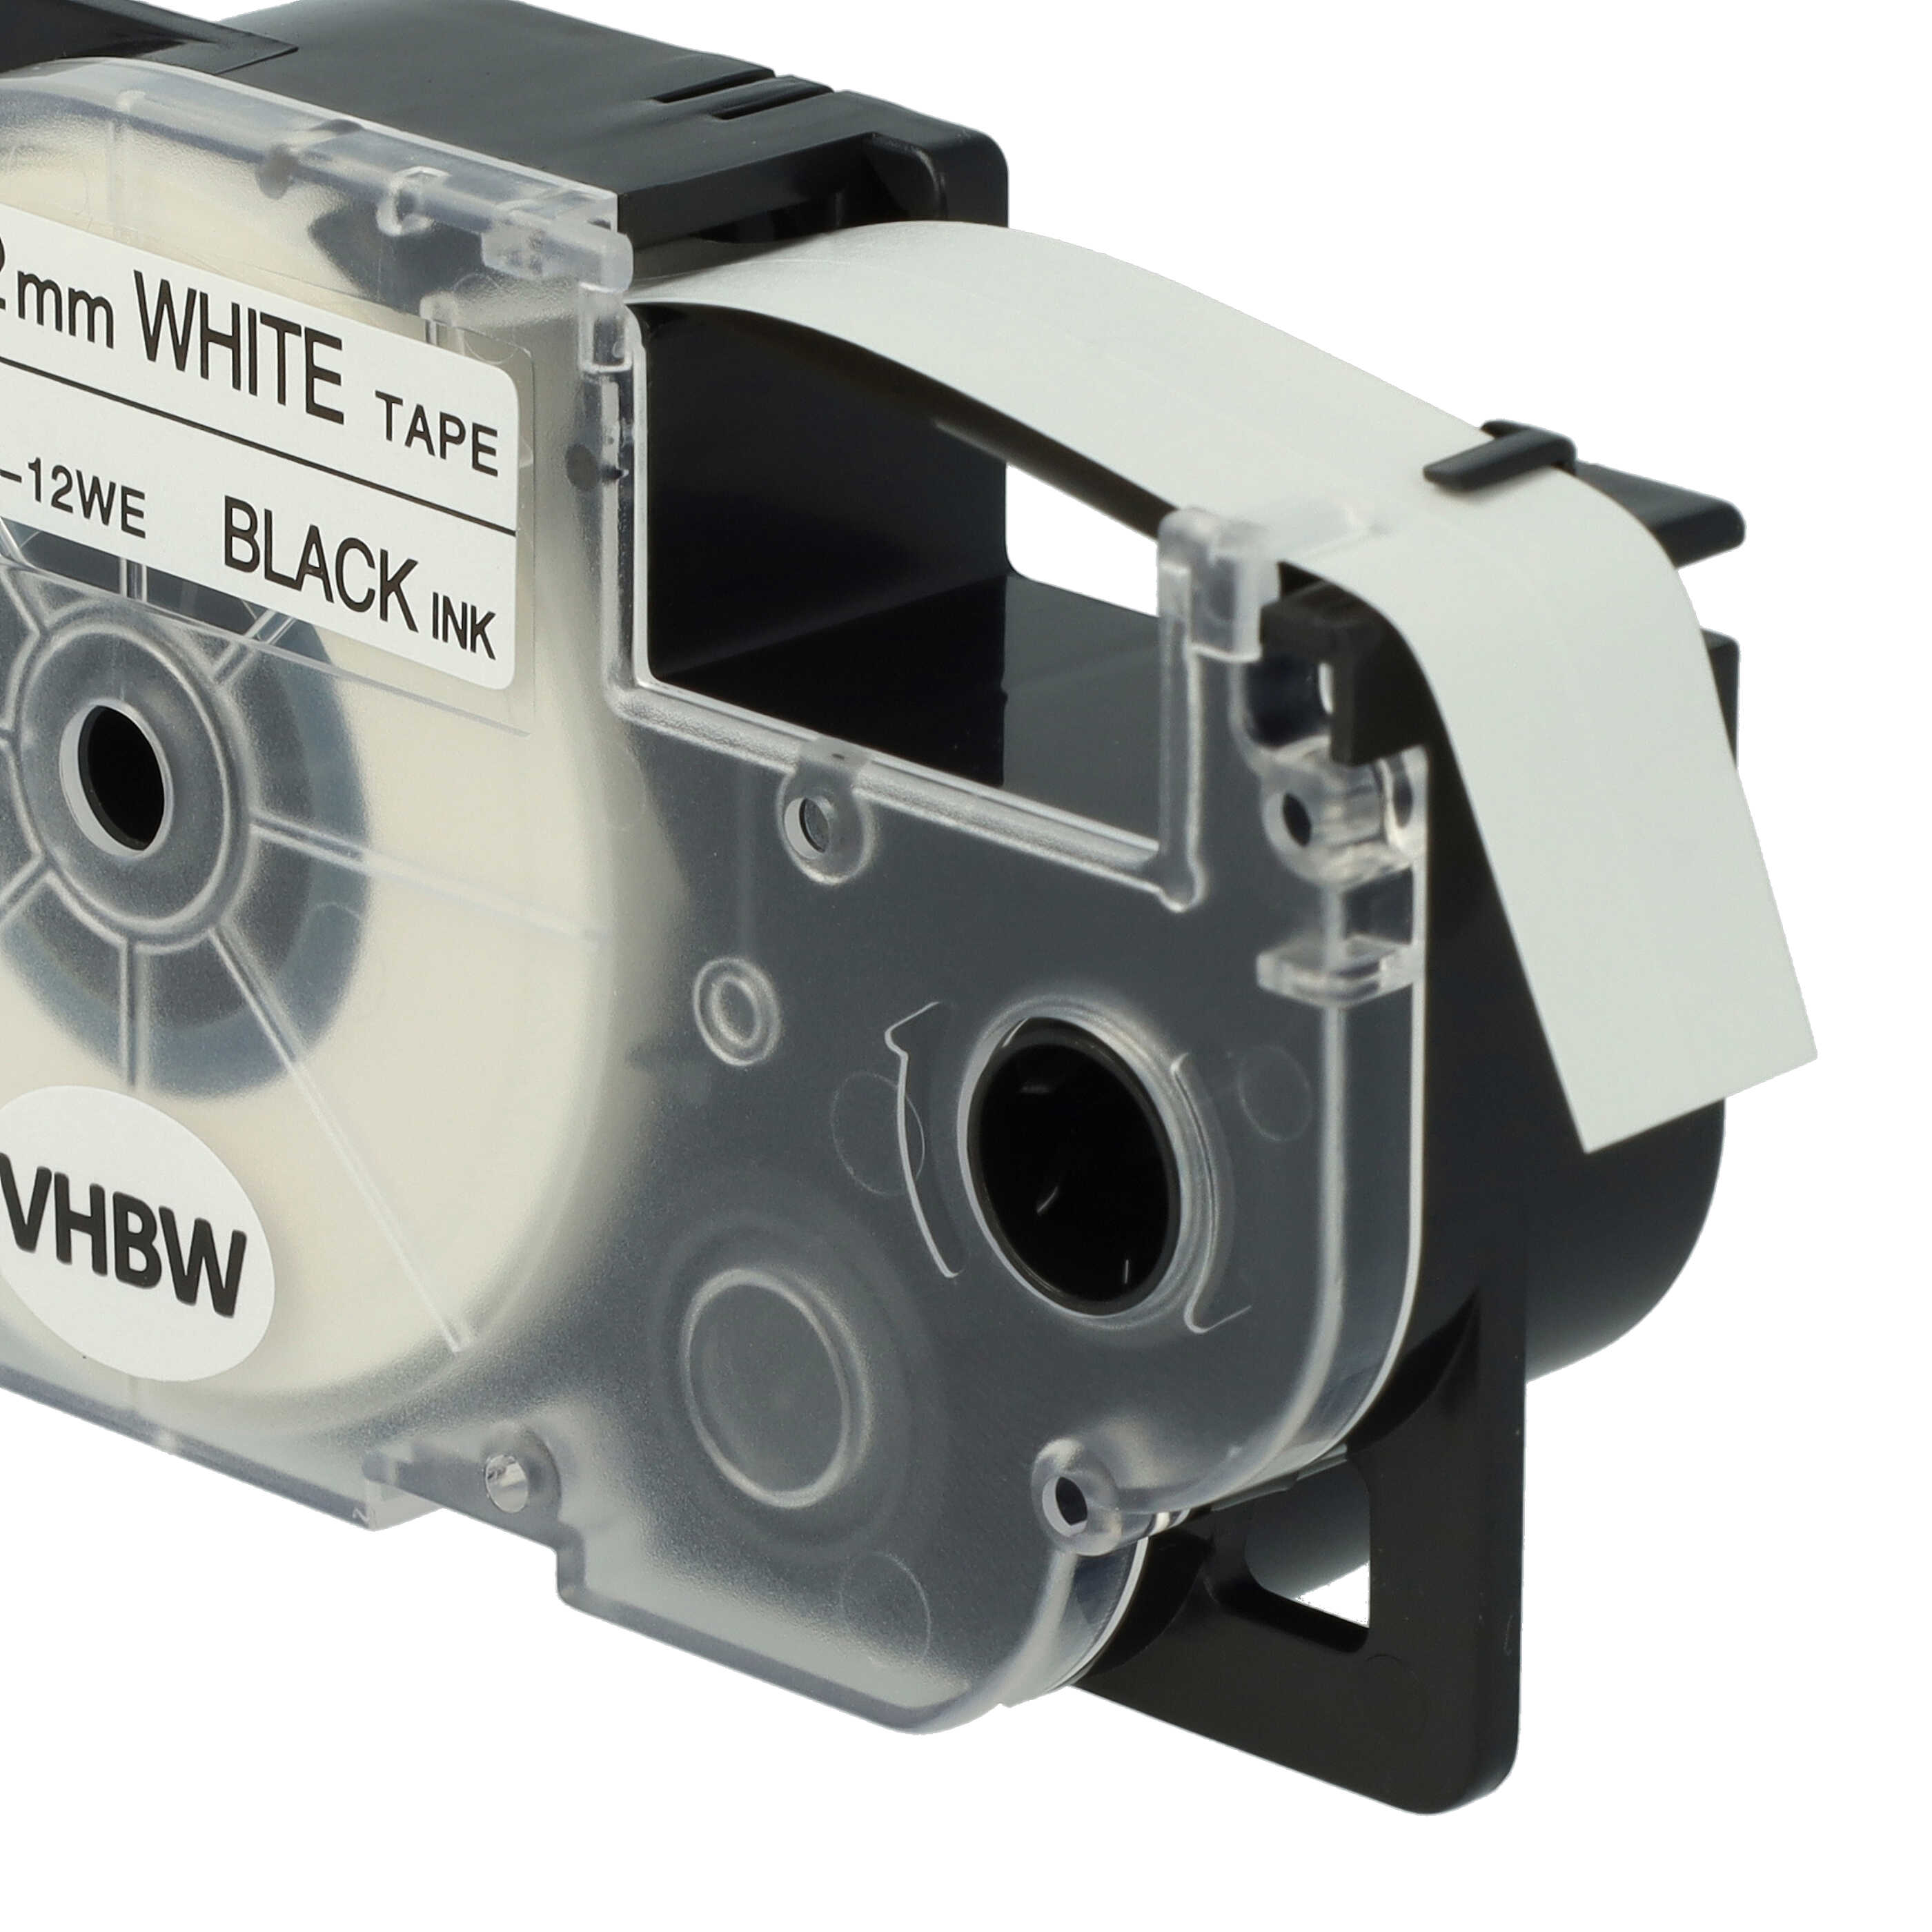 5x Casete cinta escritura reemplaza Casio XR-12WE, XR-12WE1 Negro su Blanco